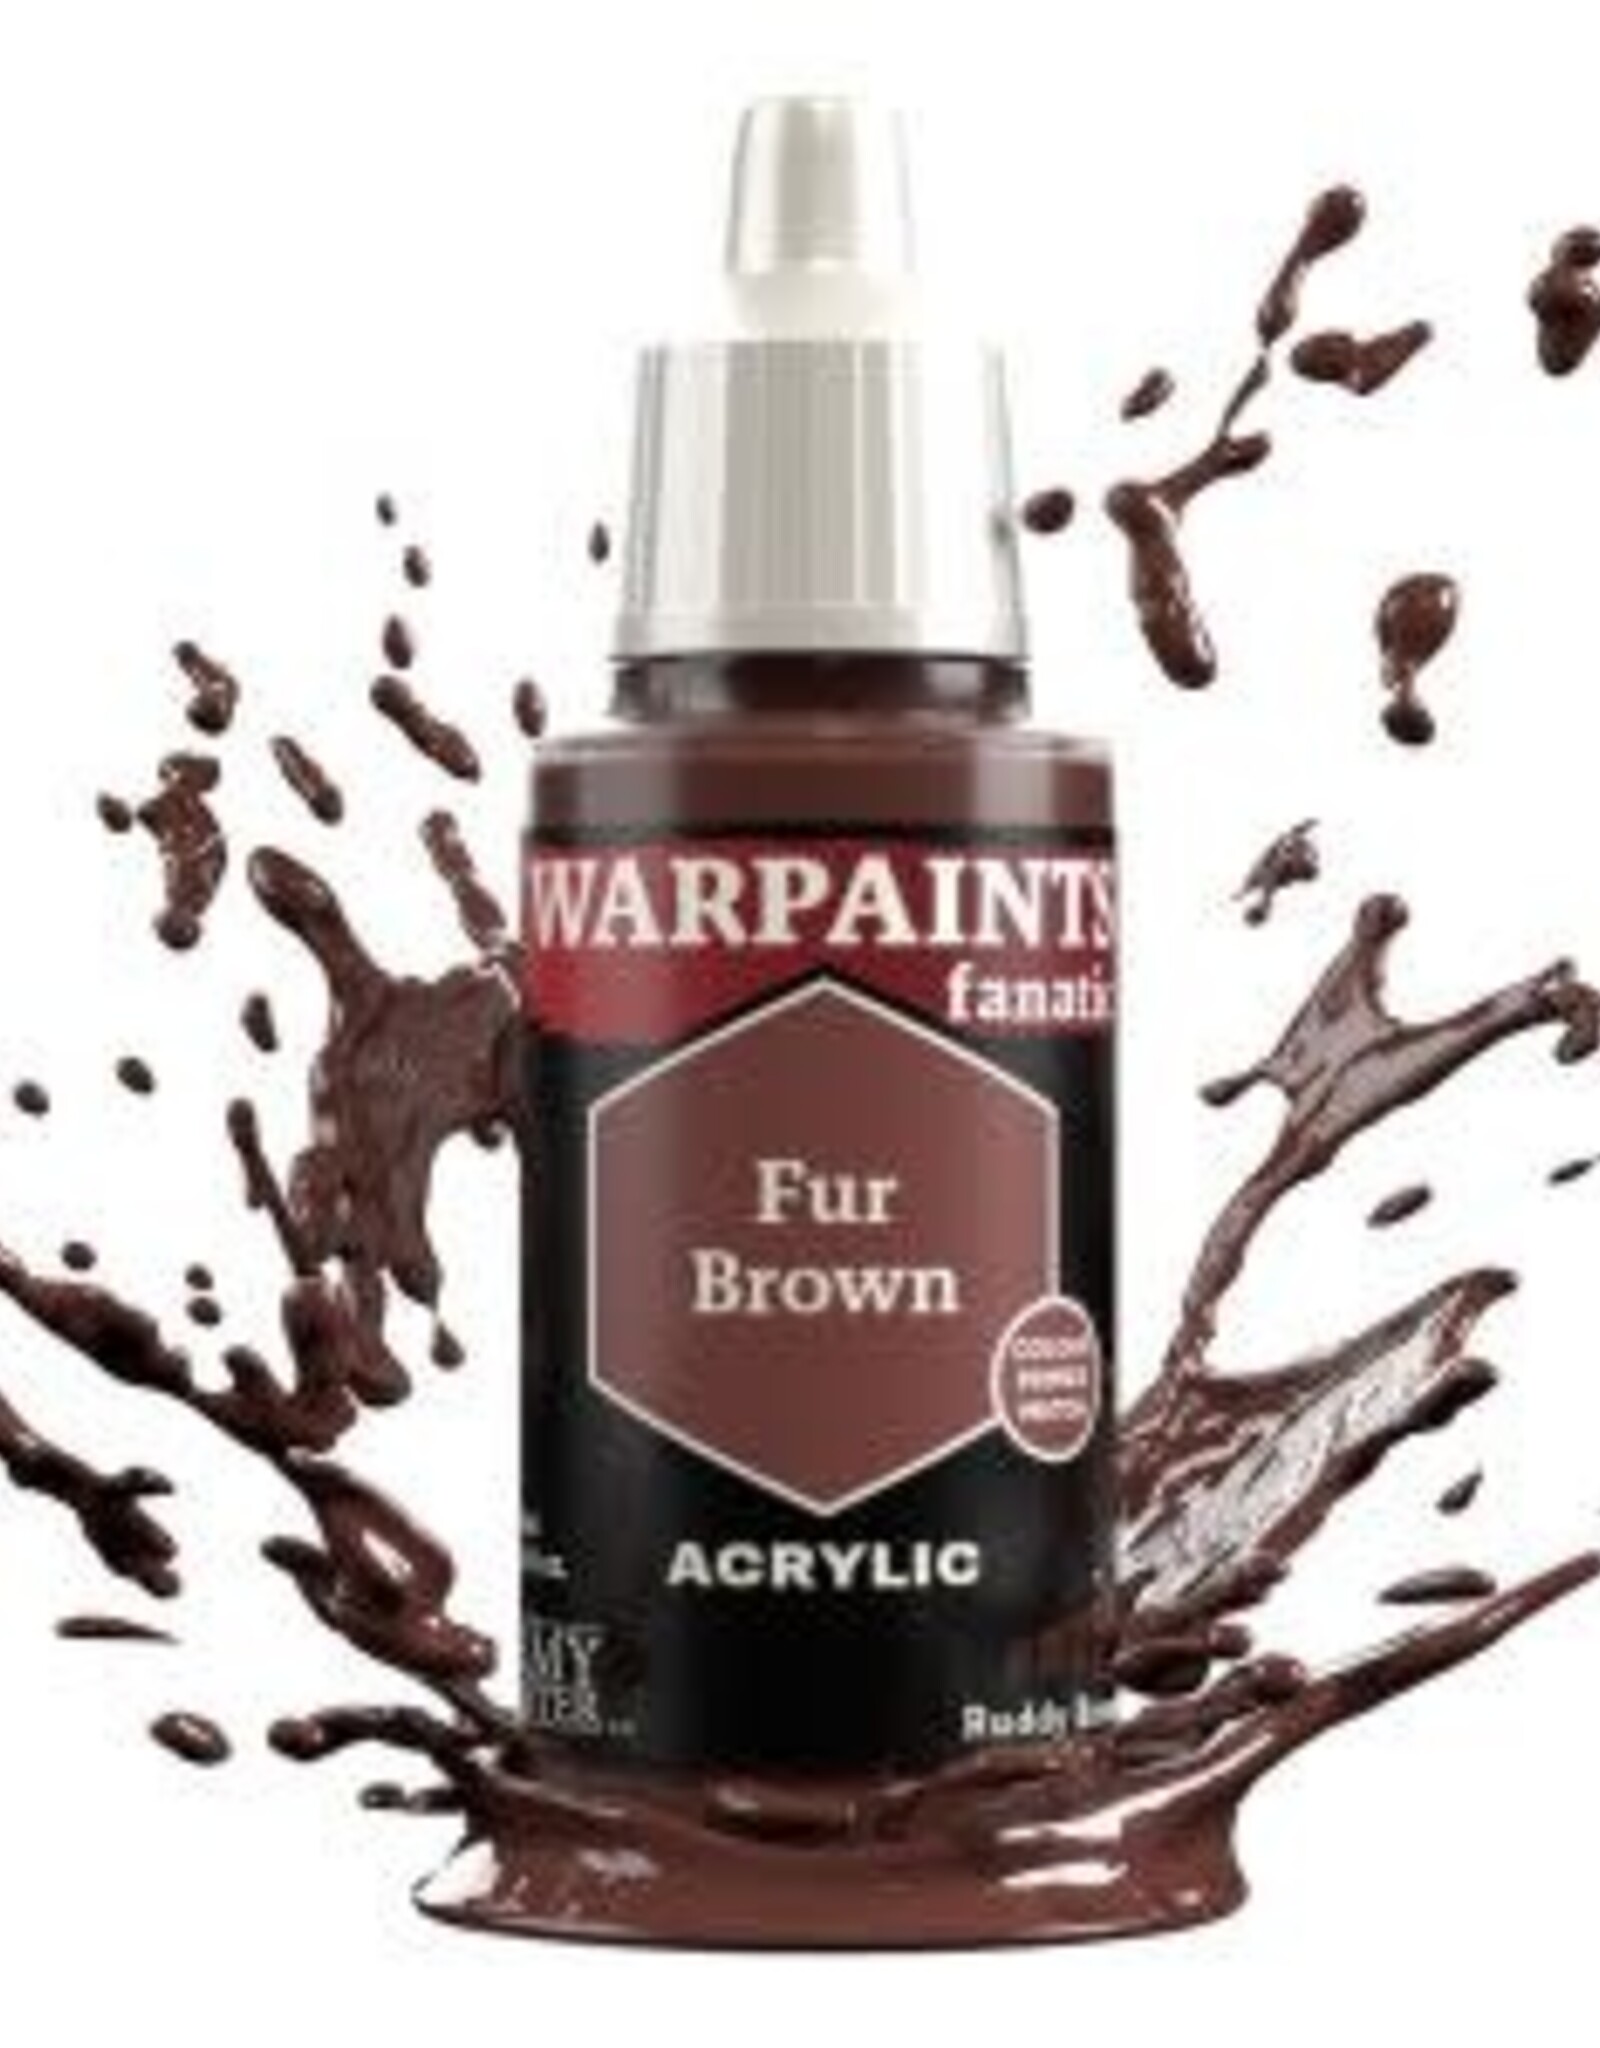 Warpaints Fanatic: Fur Brown